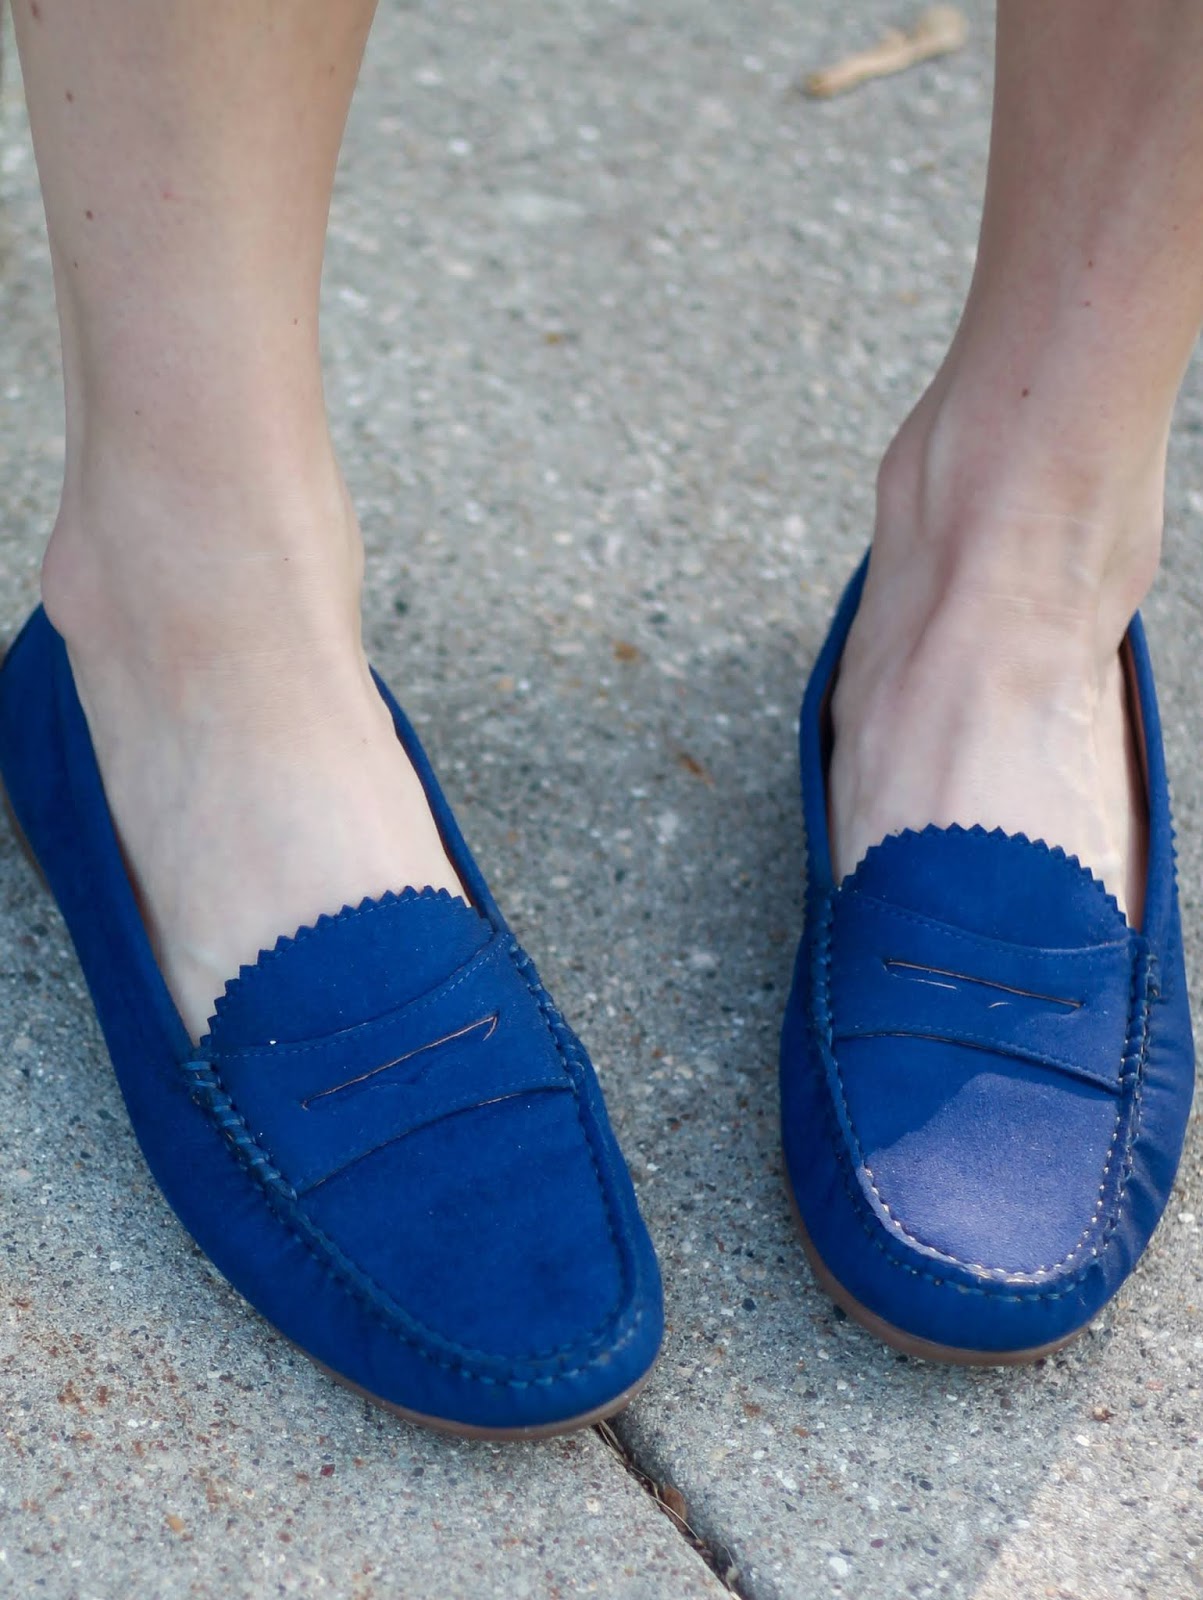 Blue Suede Shoes - I do deClaire